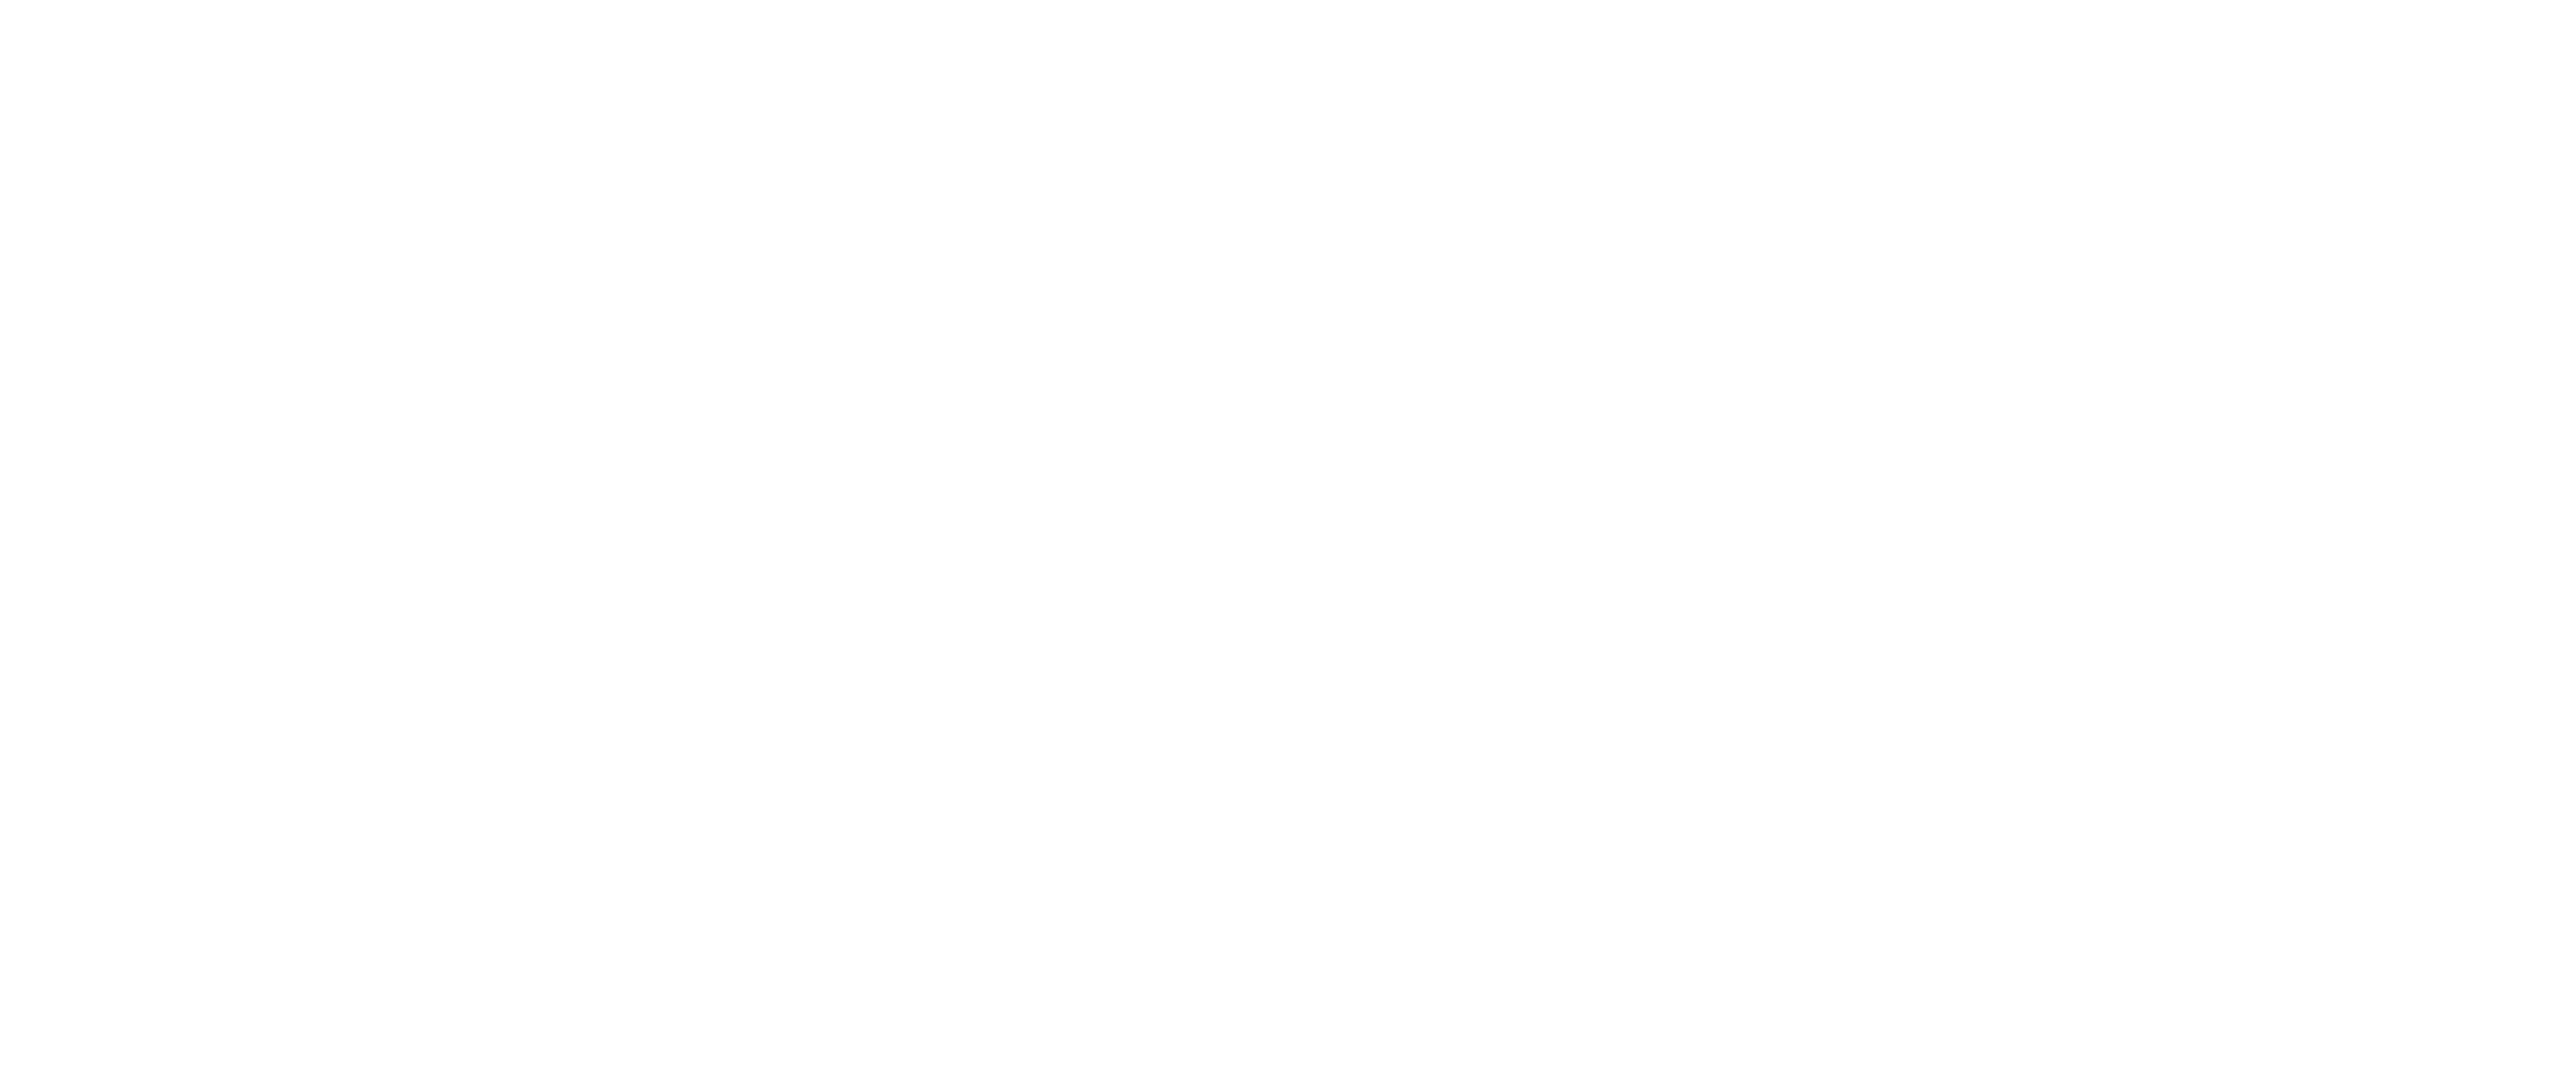 Capture the Wild Photography